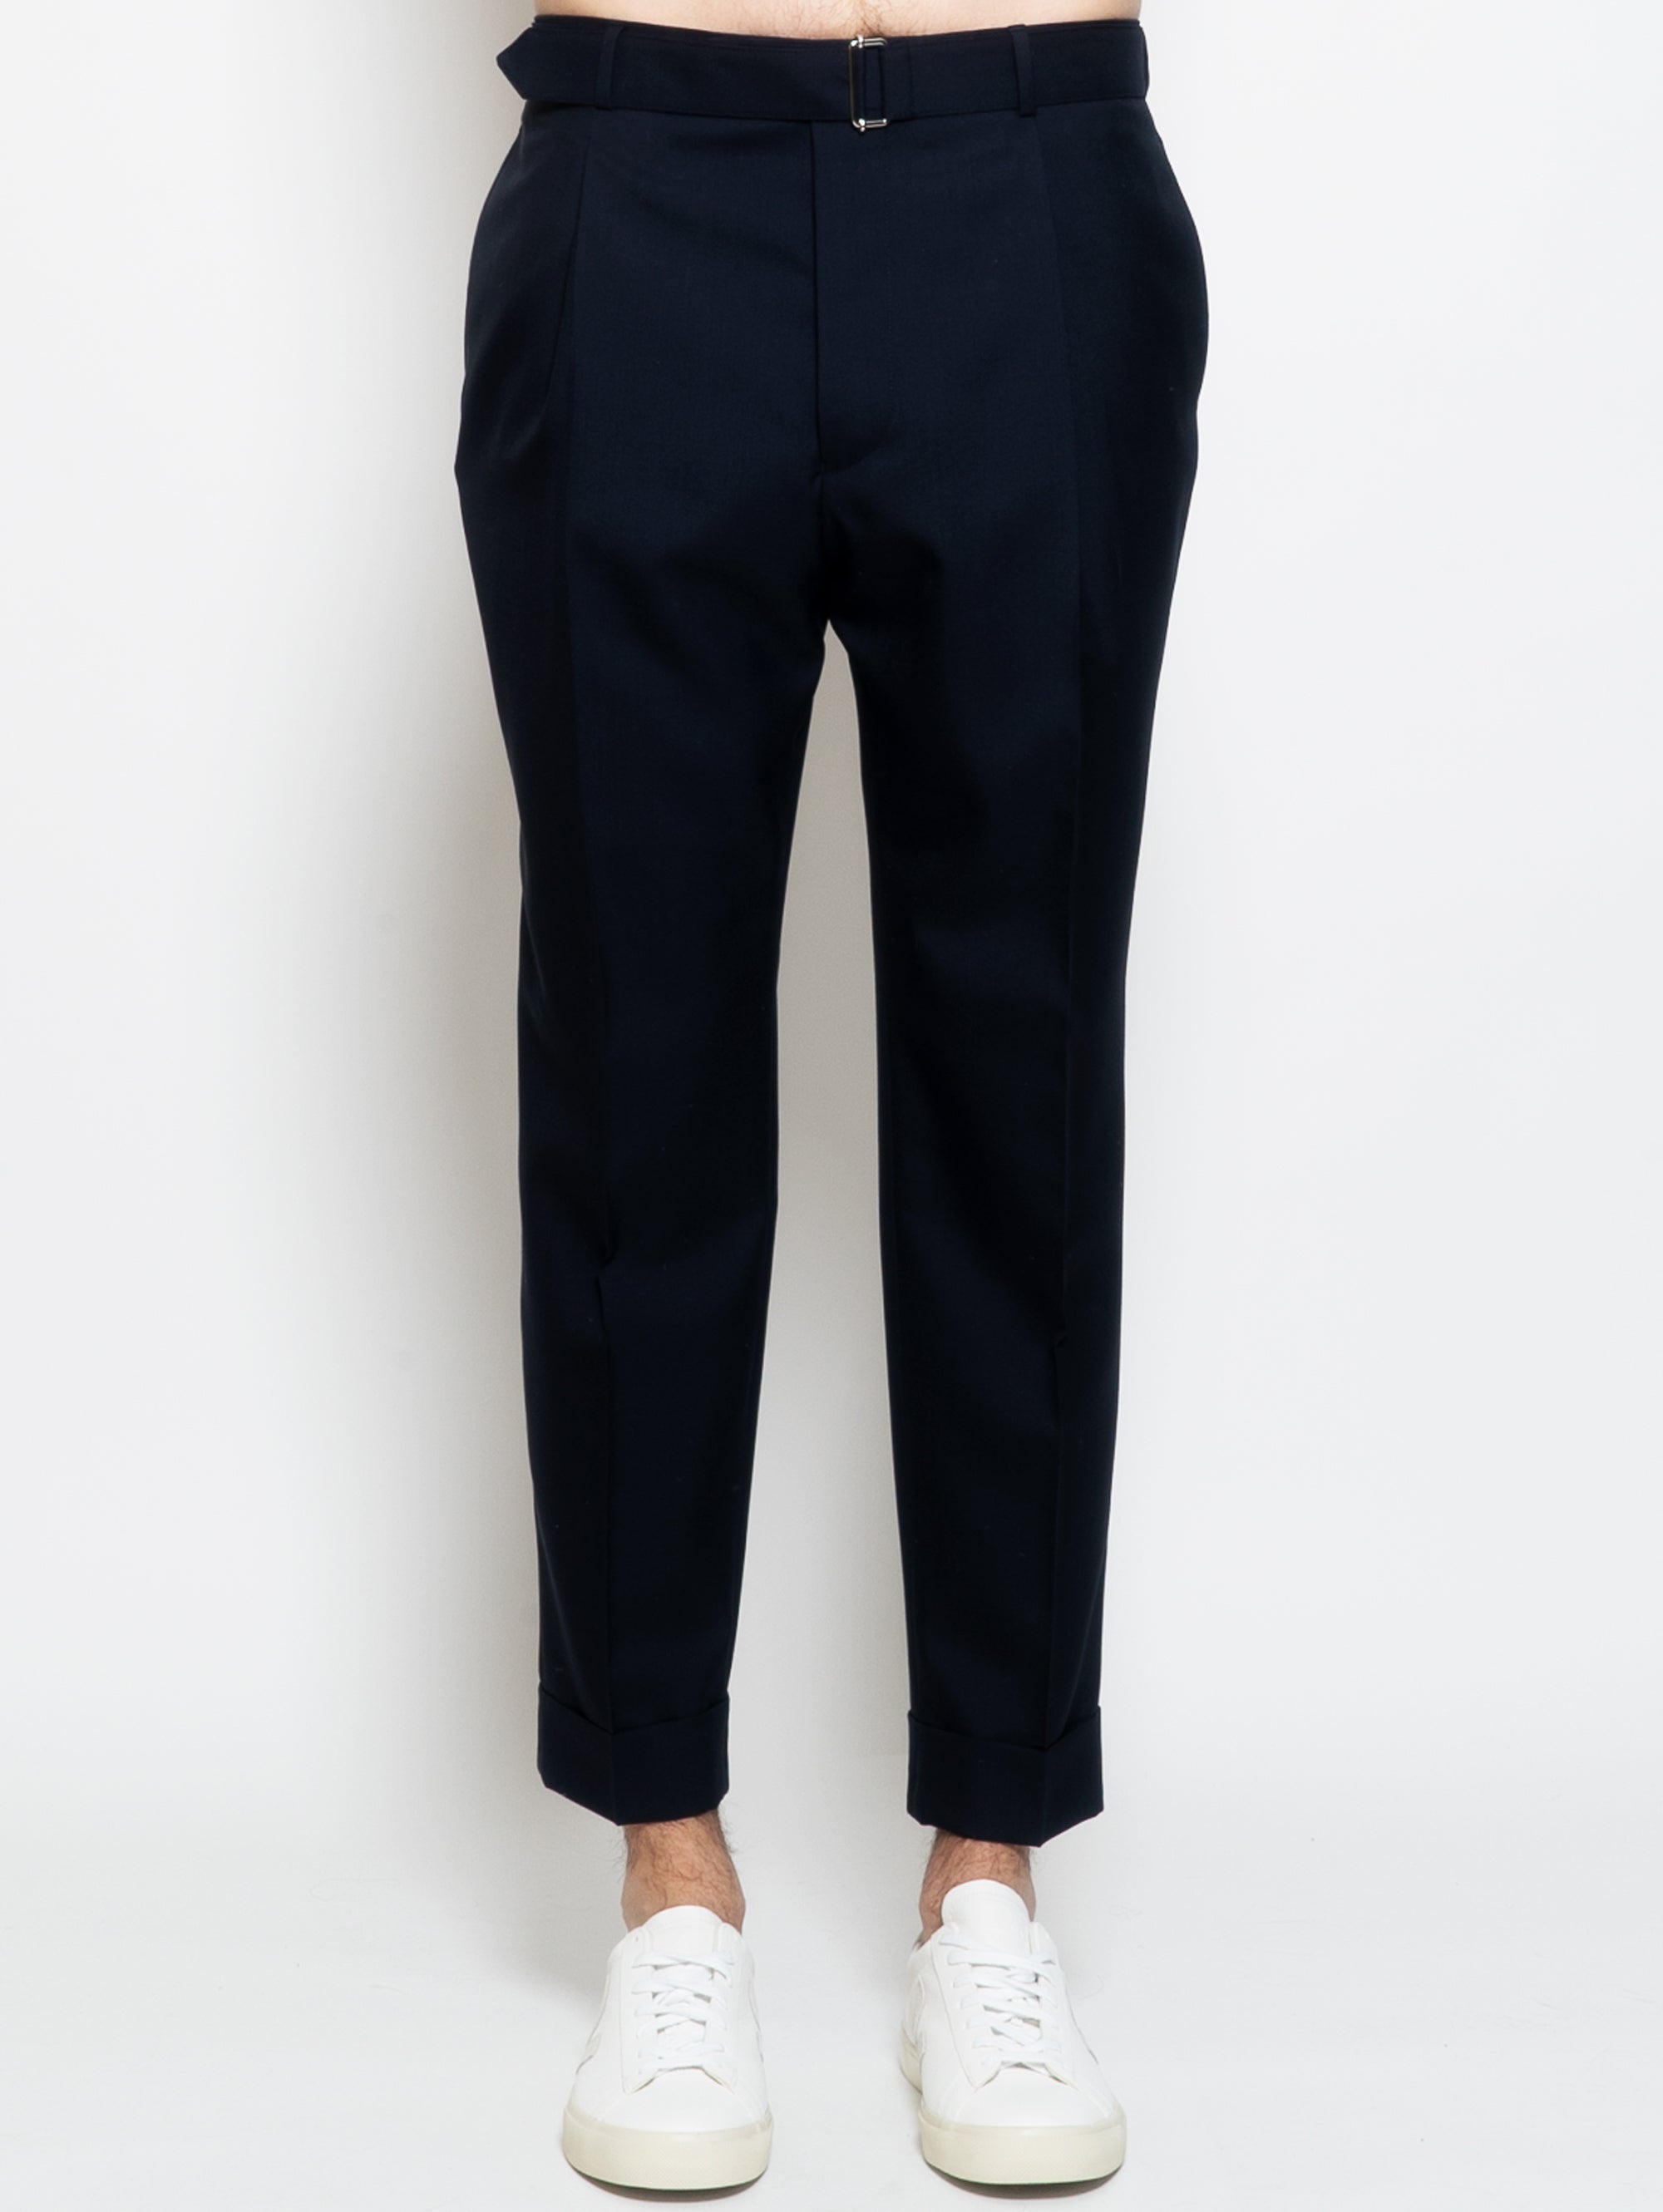 OFFICINE GÉNÉRALE-Pantaloni in Fresco Lana con Cintura Blu Navy-TRYME Shop